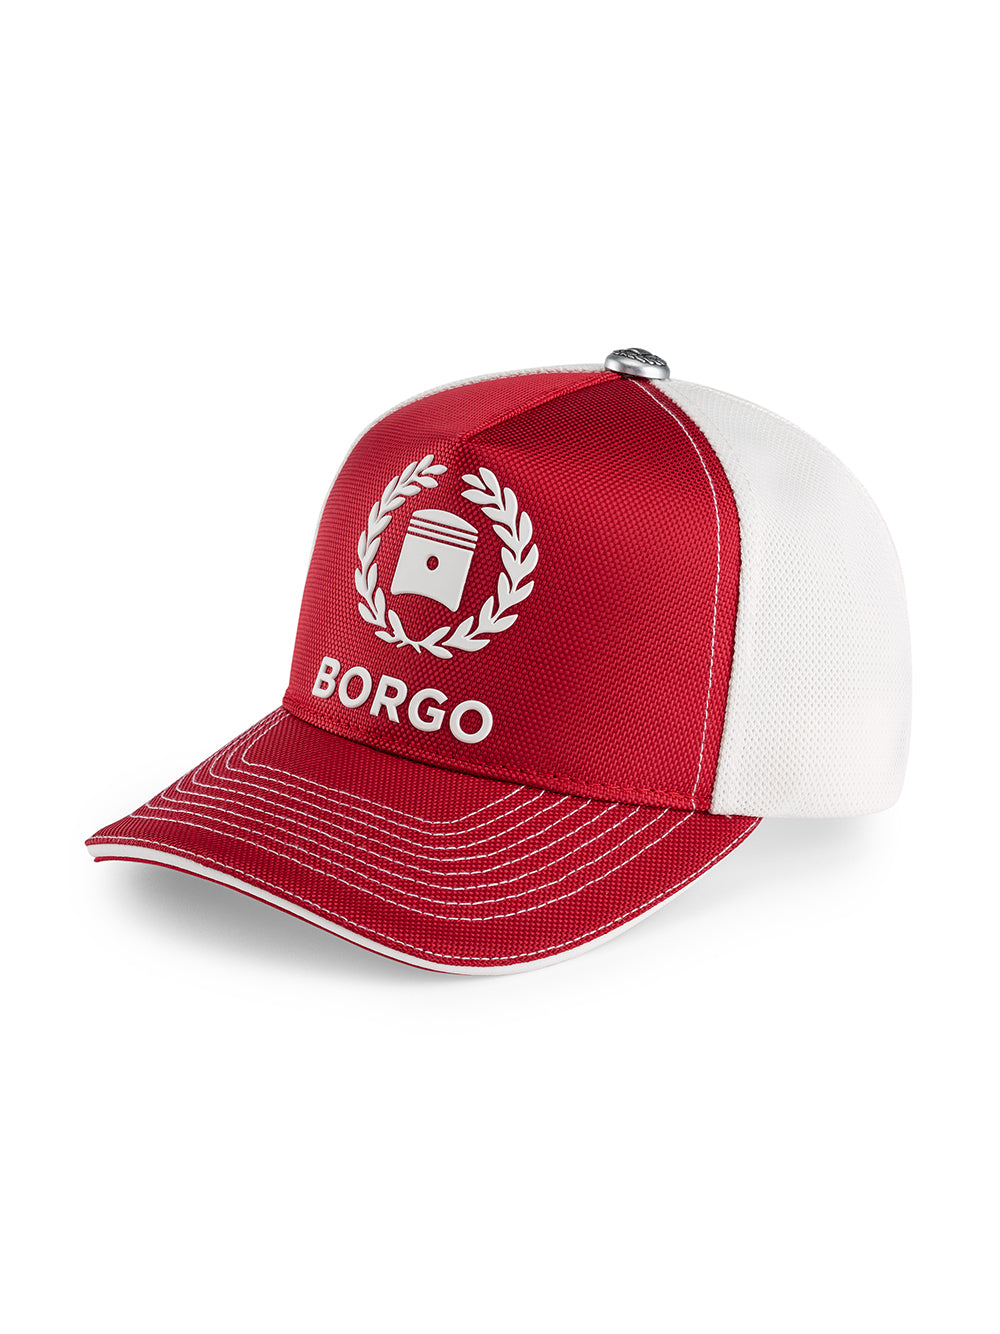 Caps - BORGO ® OFFICIAL | PERFORMANCE LUXURY BORN IN ITALY 1910